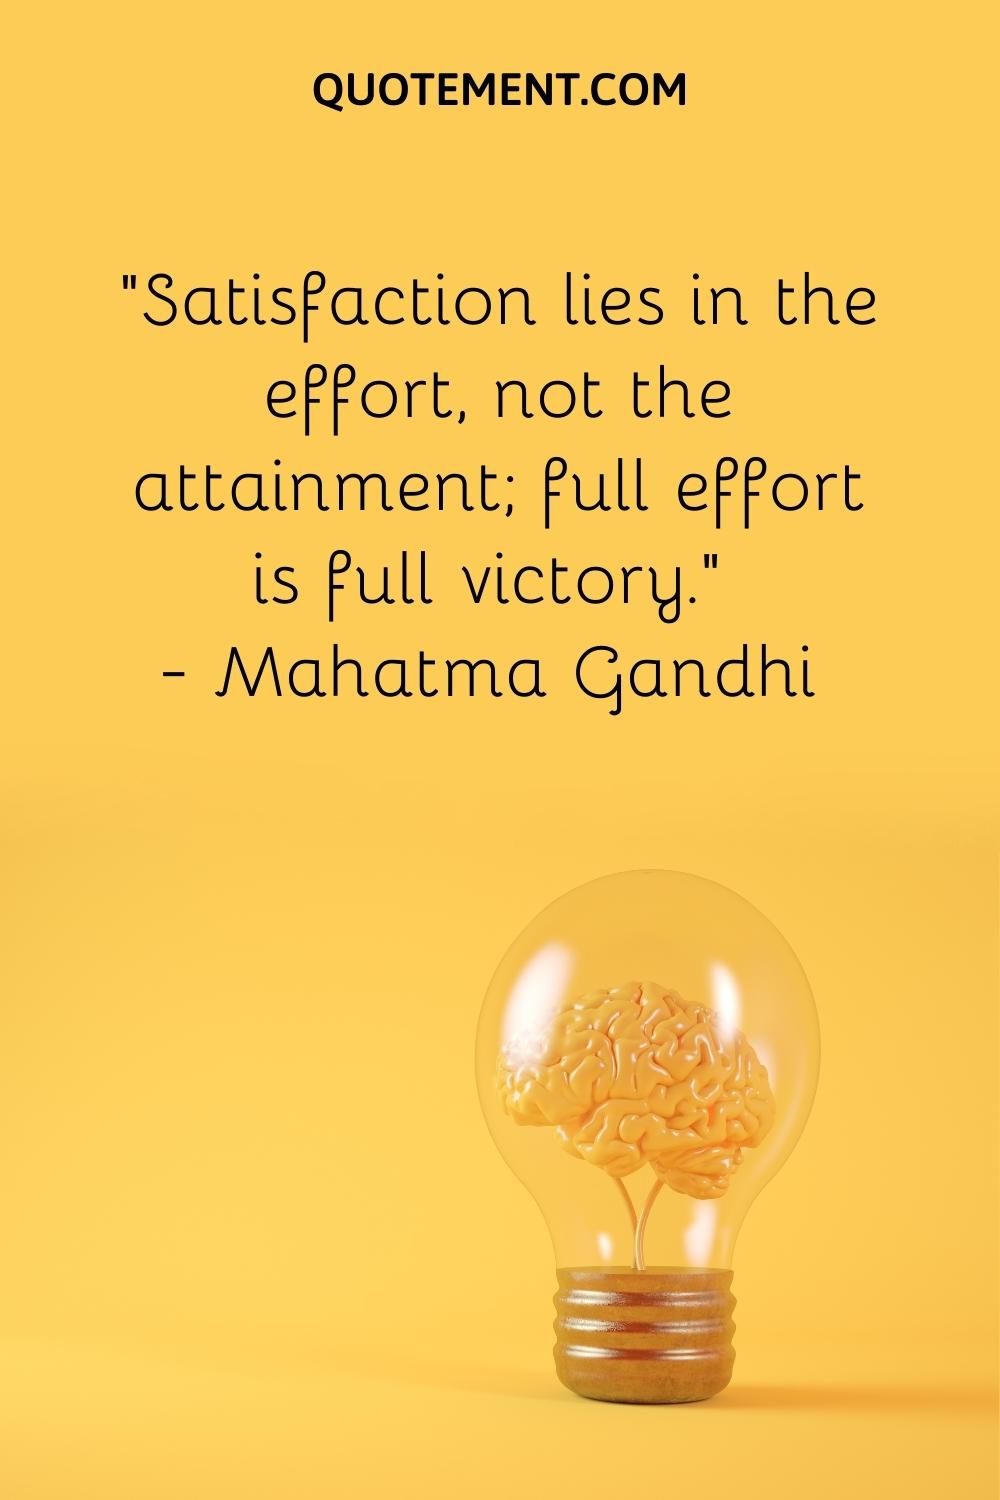 “Satisfaction lies in the effort, not the attainment; full effort is full victory.” — Mahatma Gandhi